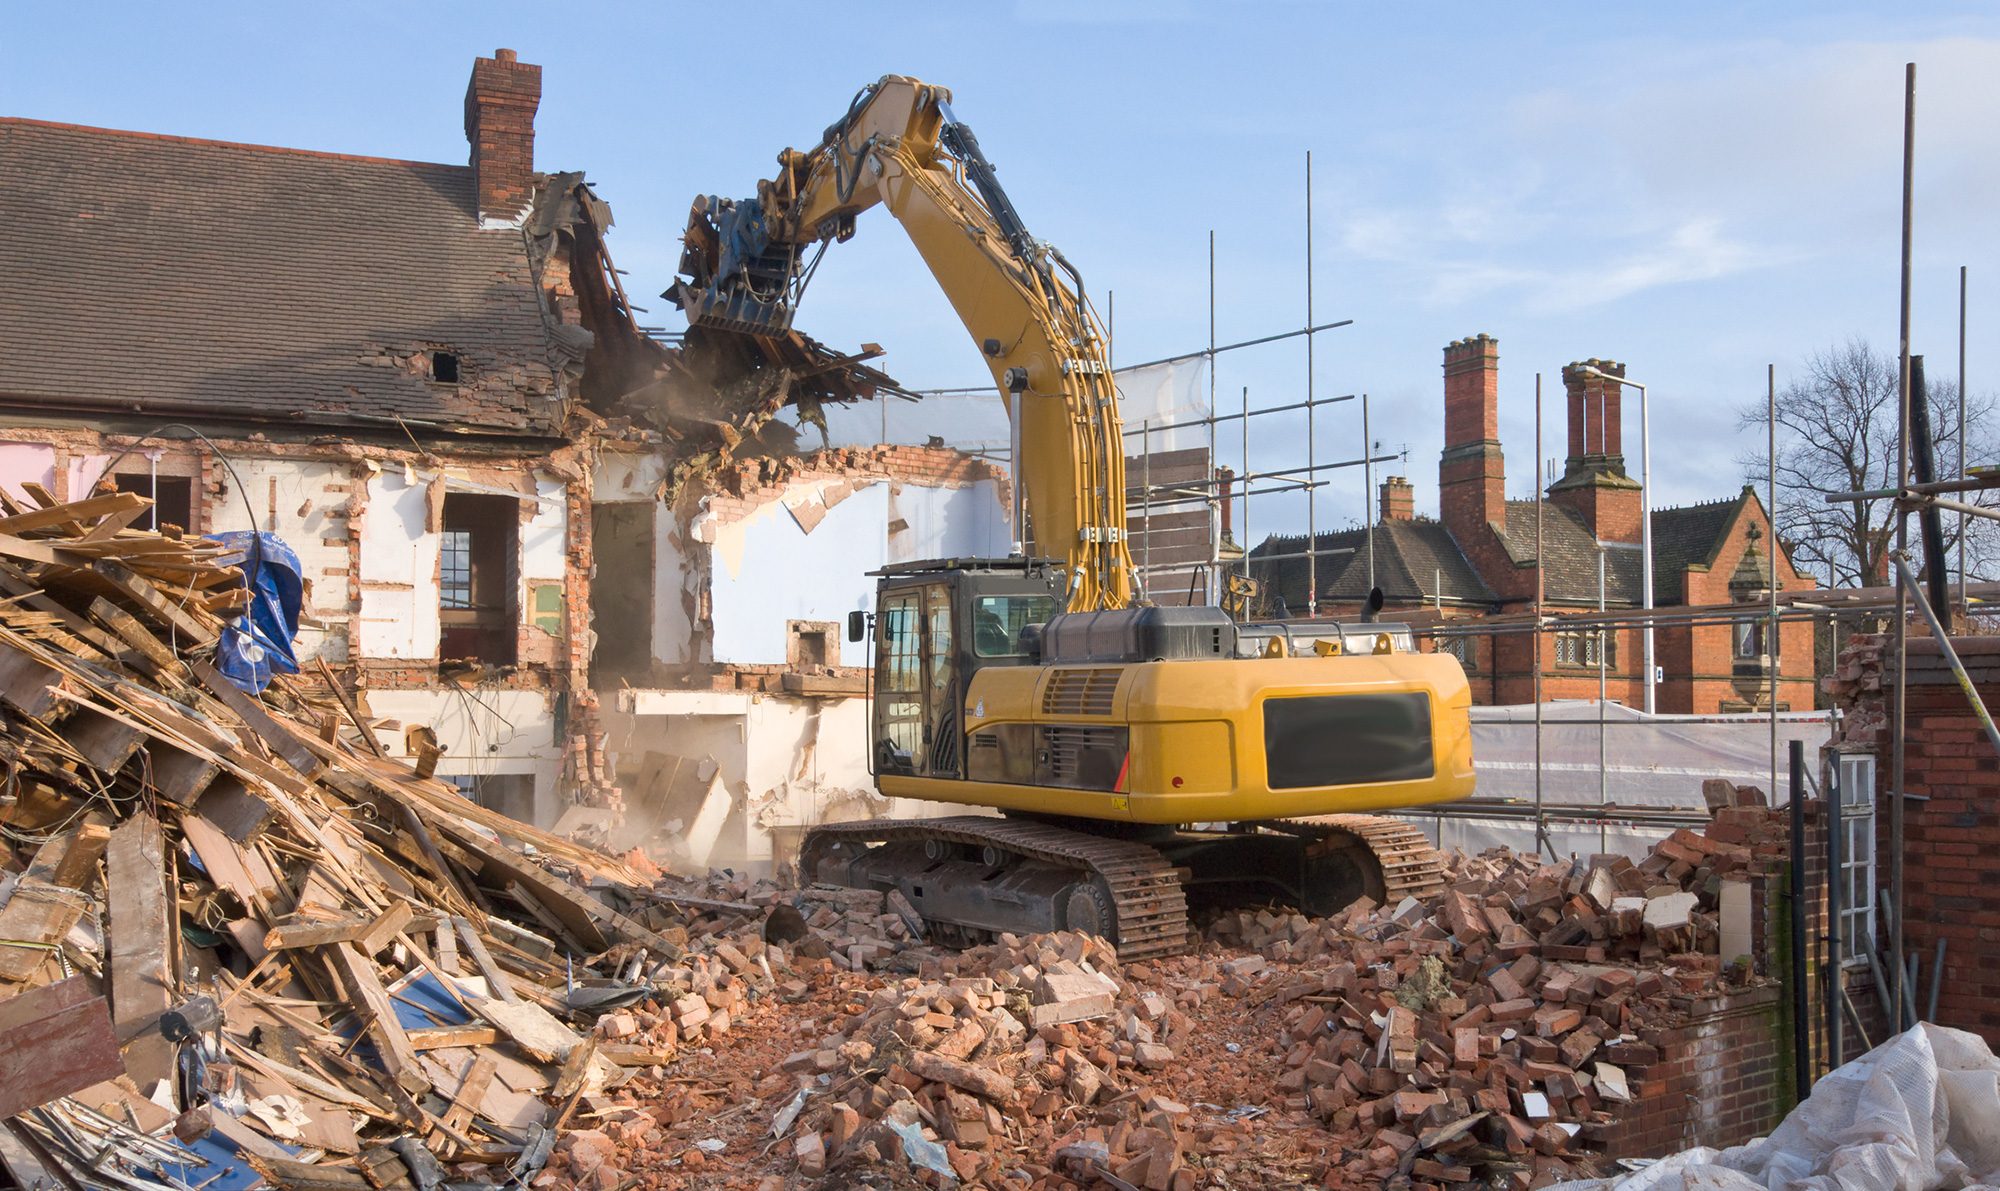 Planning permission to demolish a house